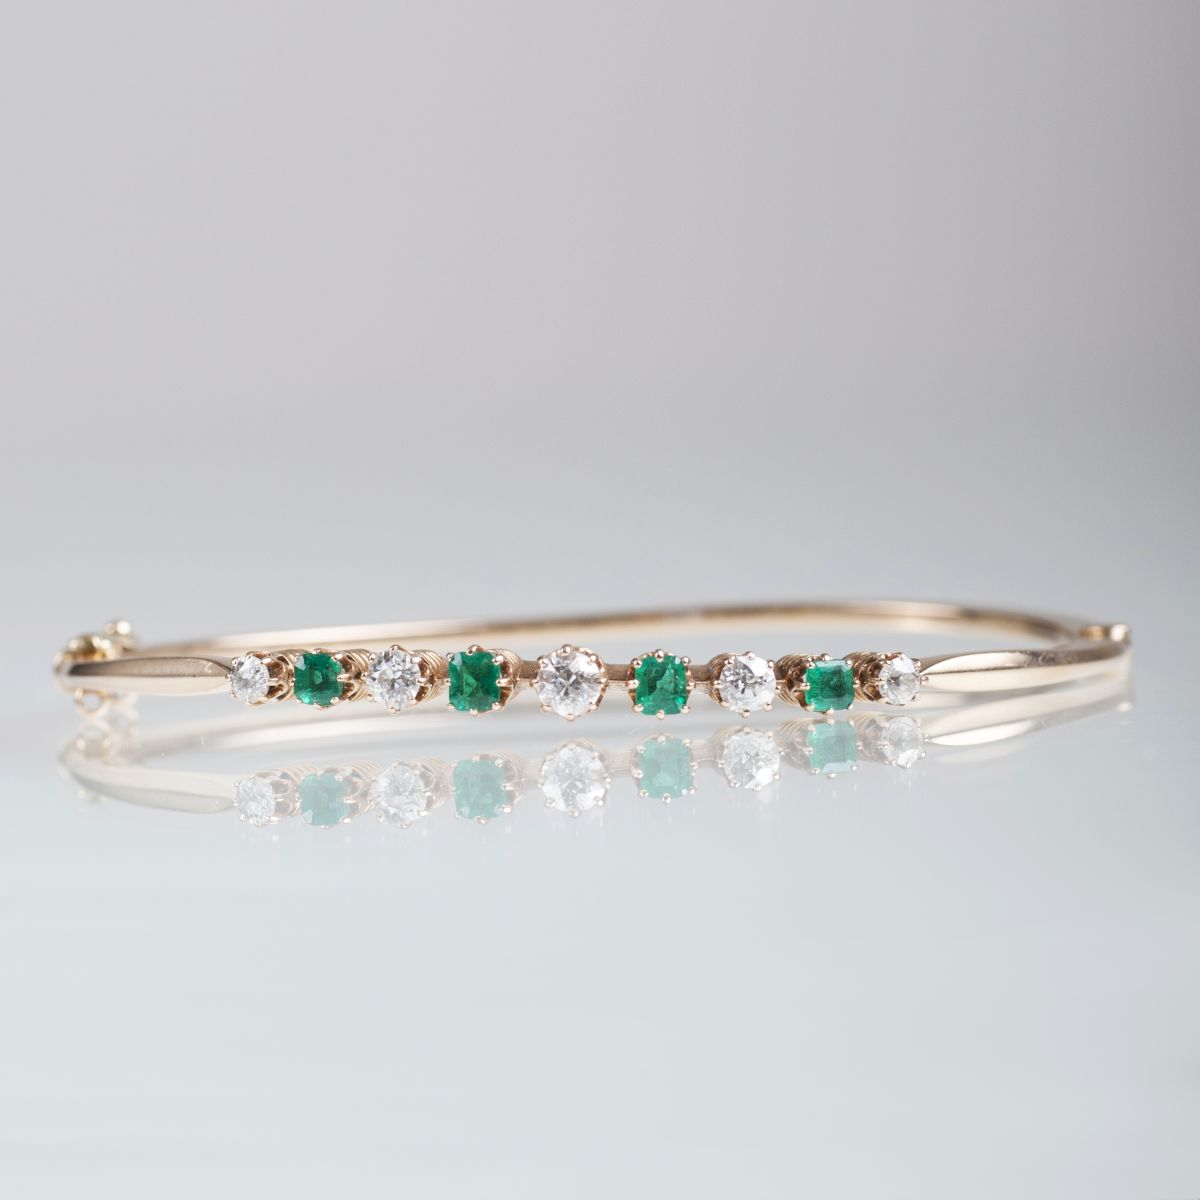 A Vintage bangle bracelet with emeralds and diamonds